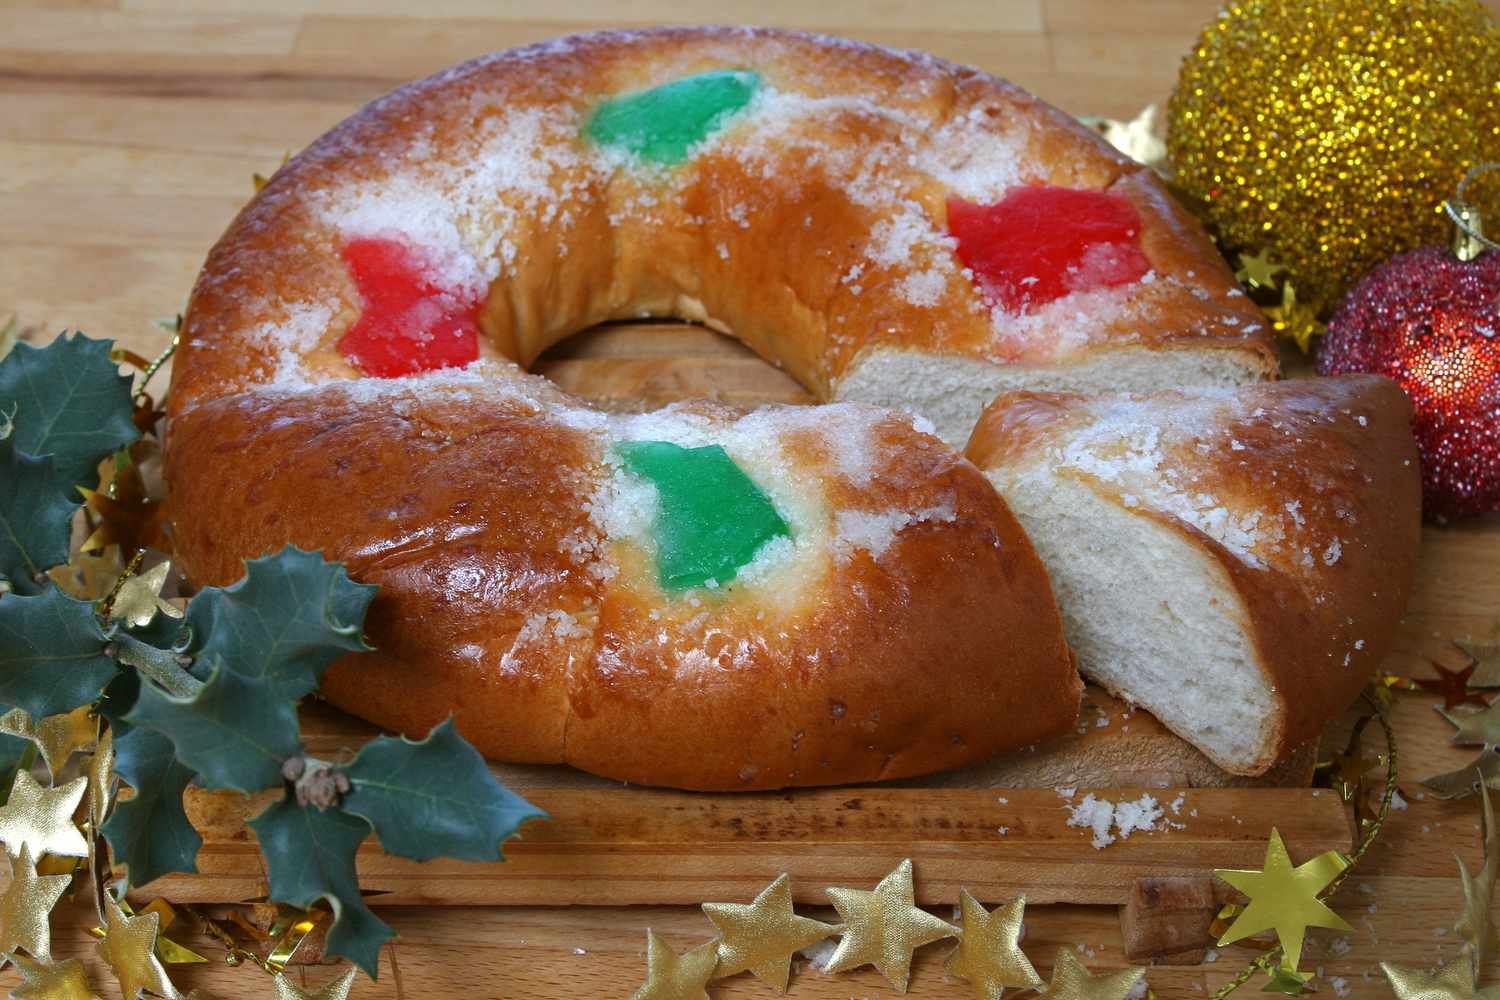 Róscon de Reyes: Spanish Kings' Cake